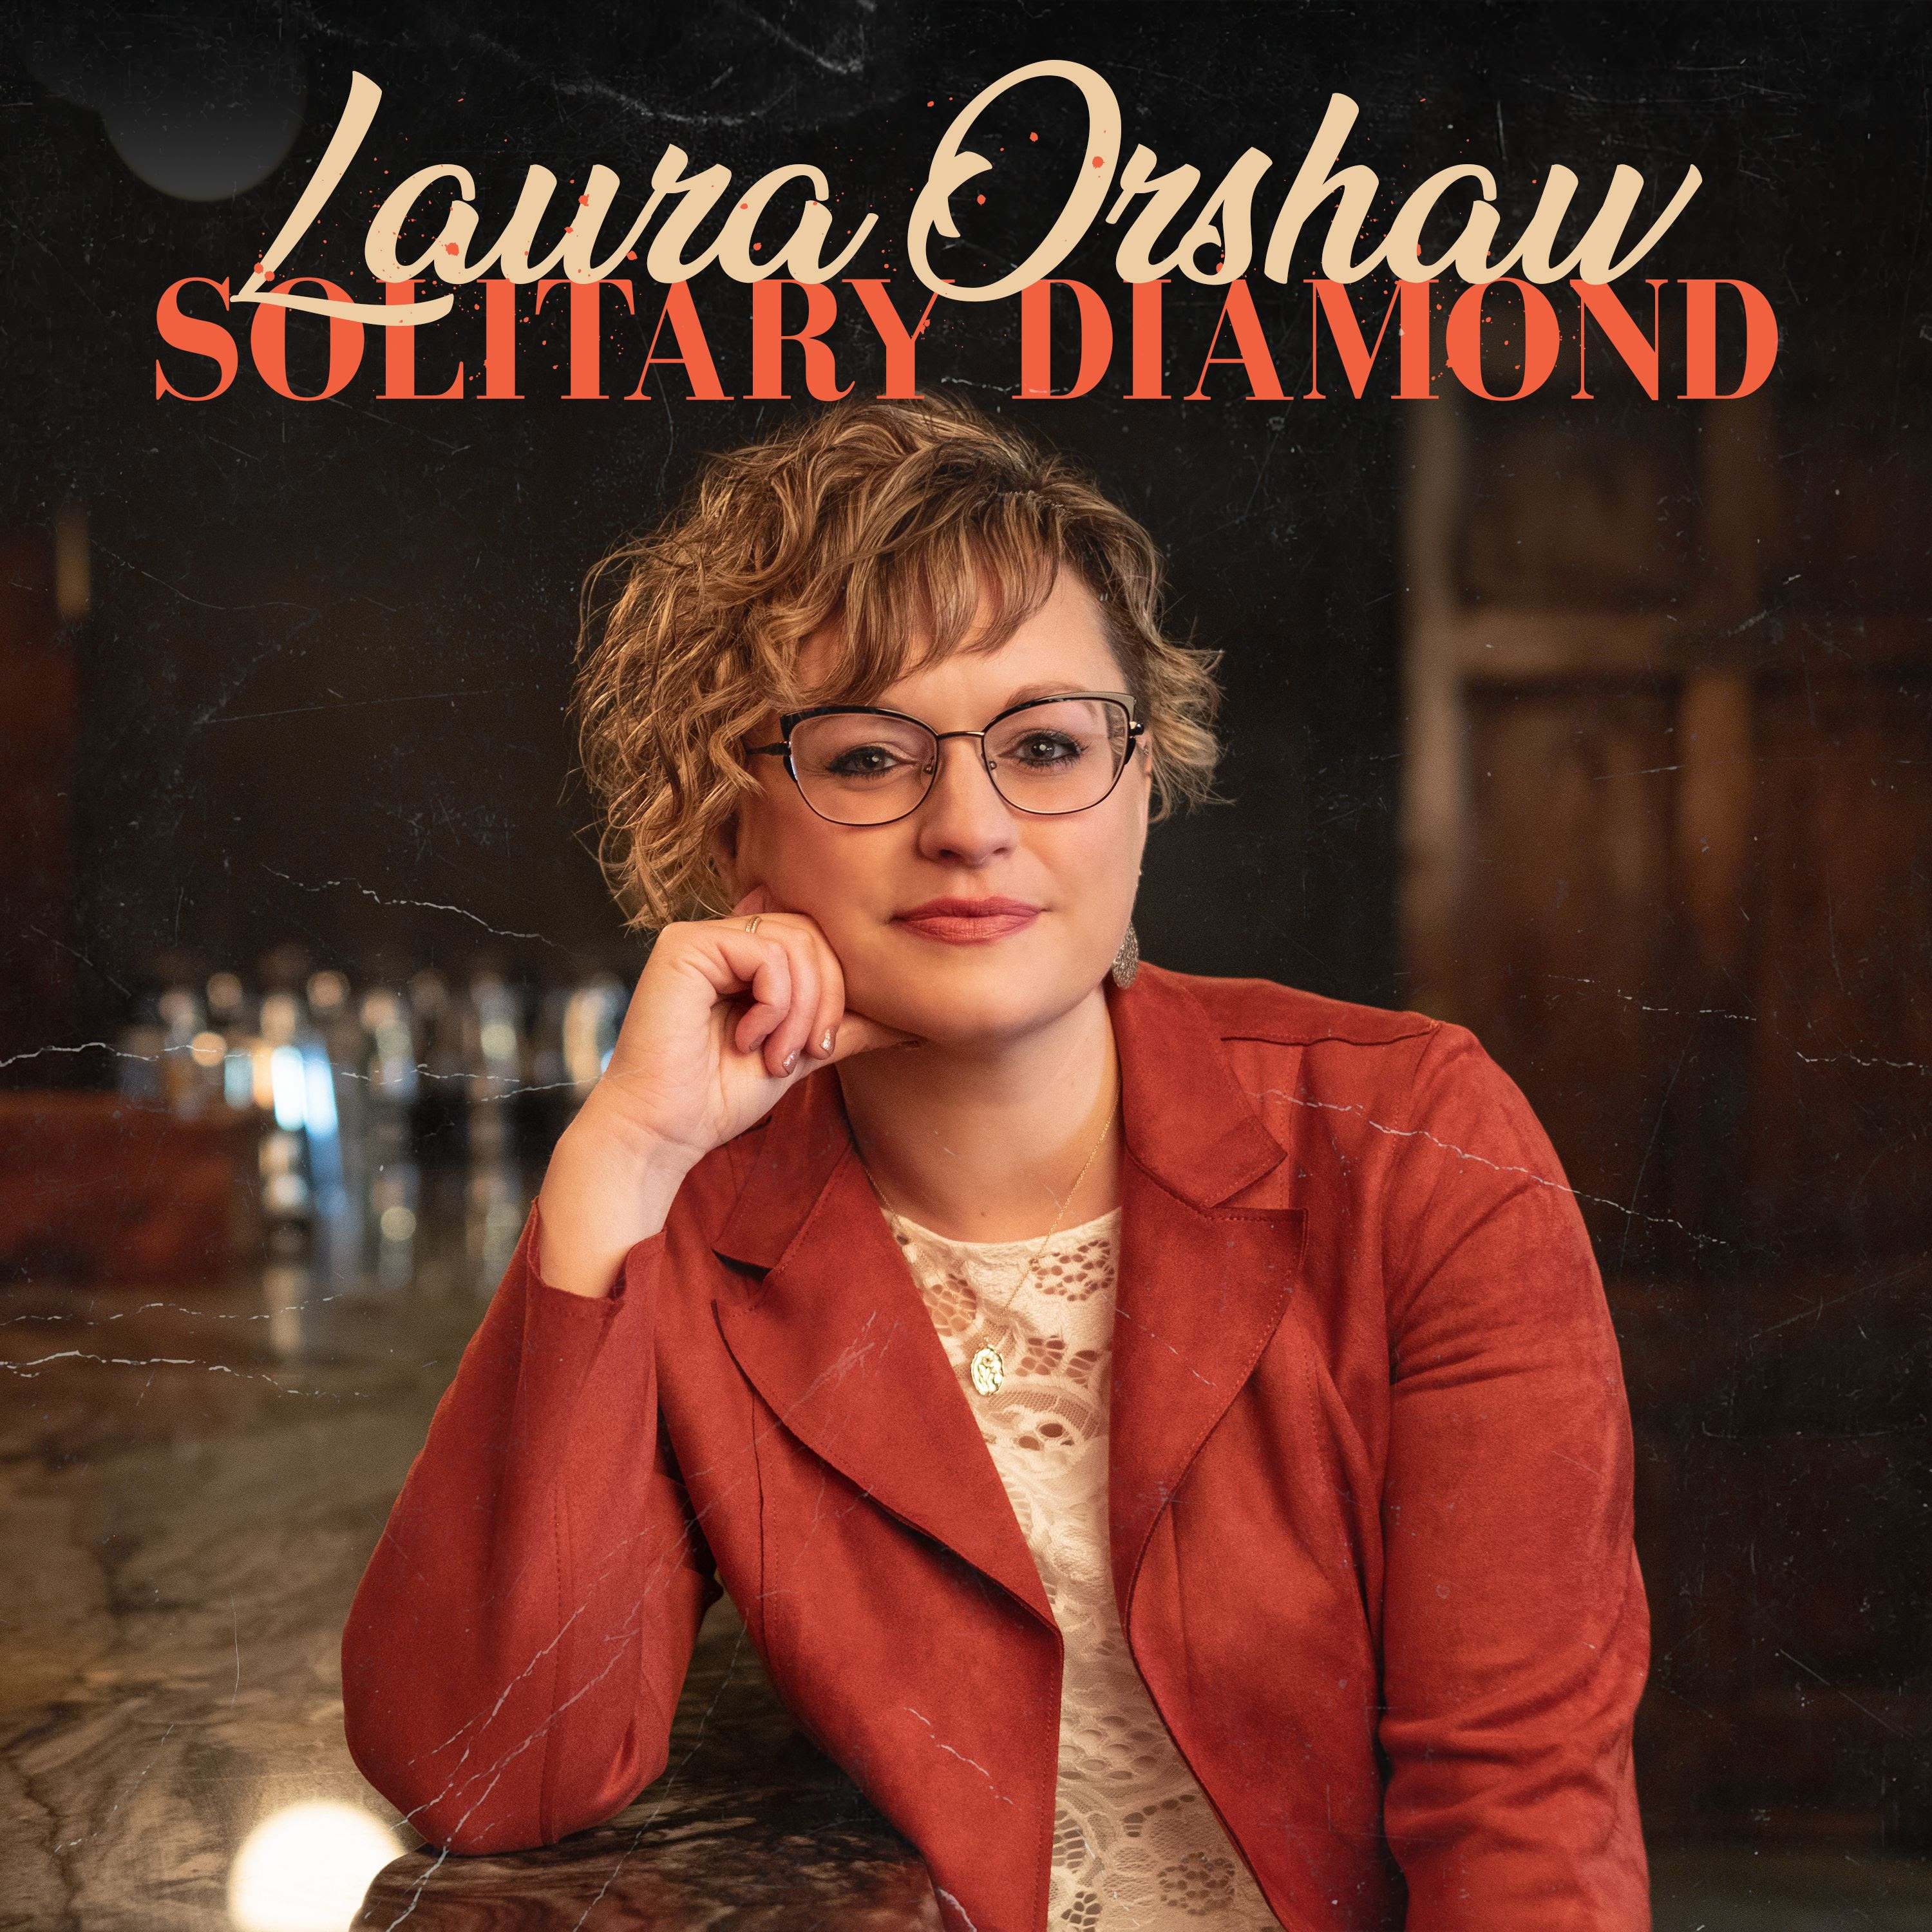 New album from Laura Orshaw: "Solitary Diamond"